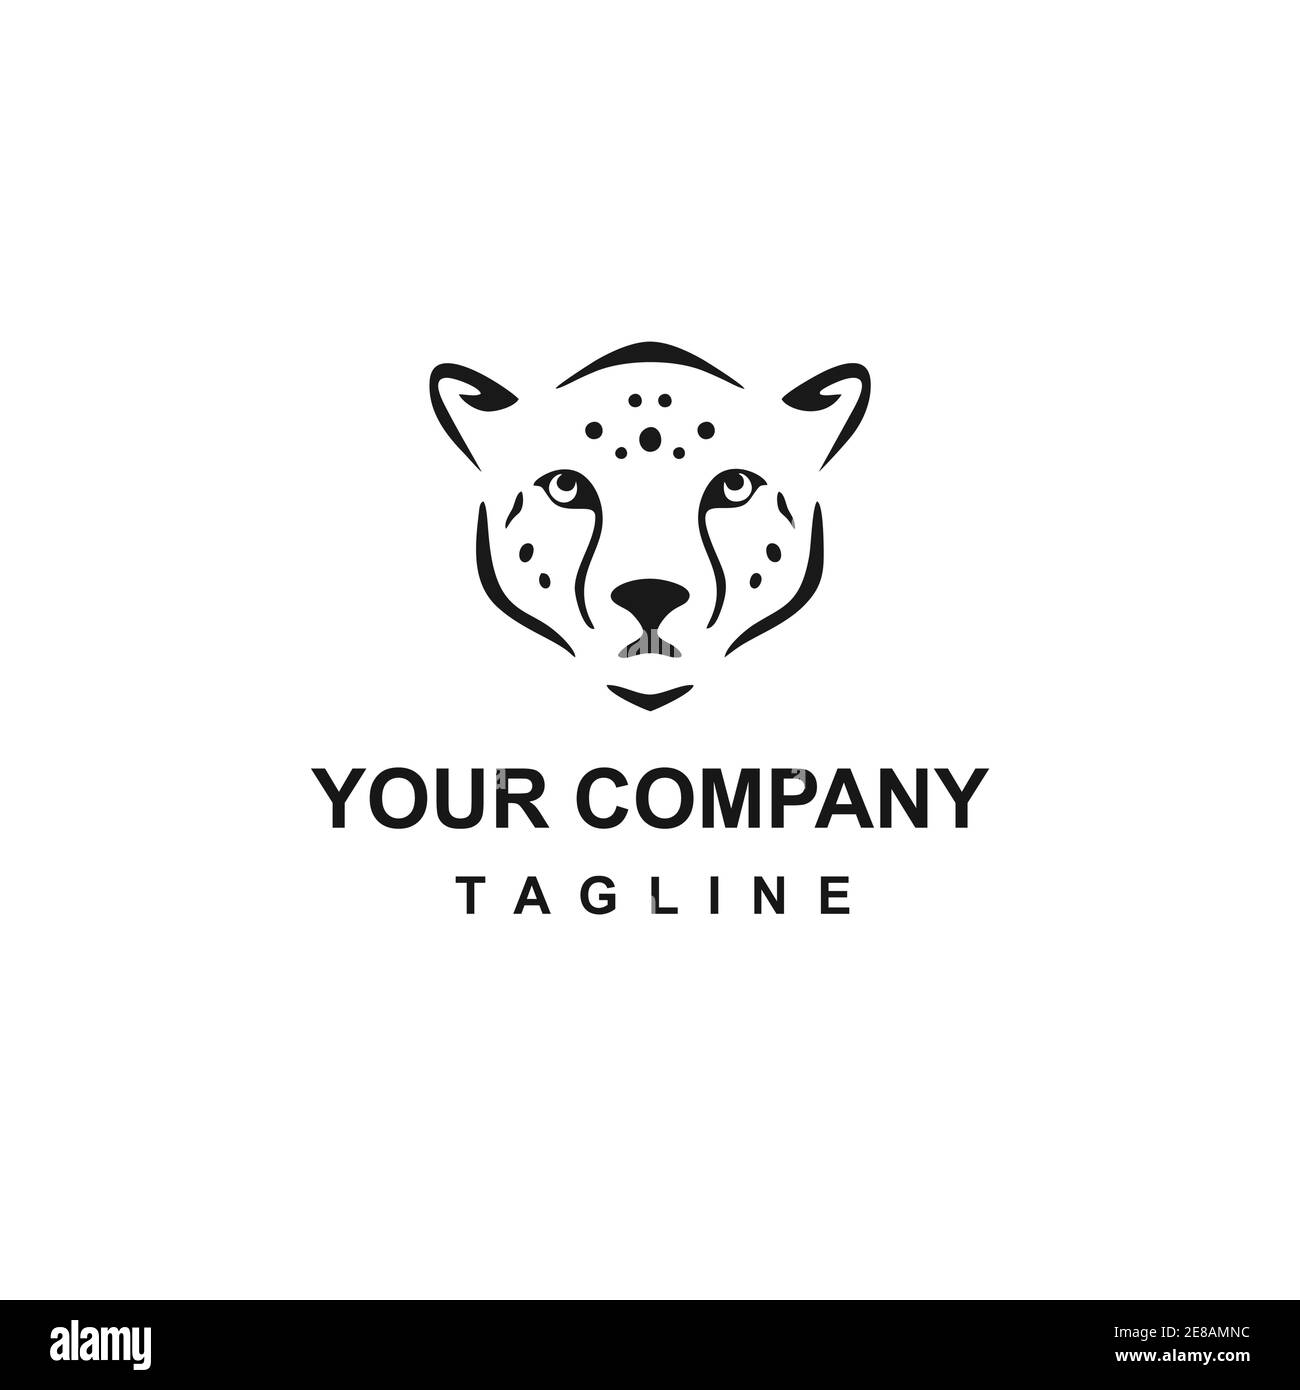 Cheetah Logo Images – Browse 11,619 Stock Photos, Vectors, and